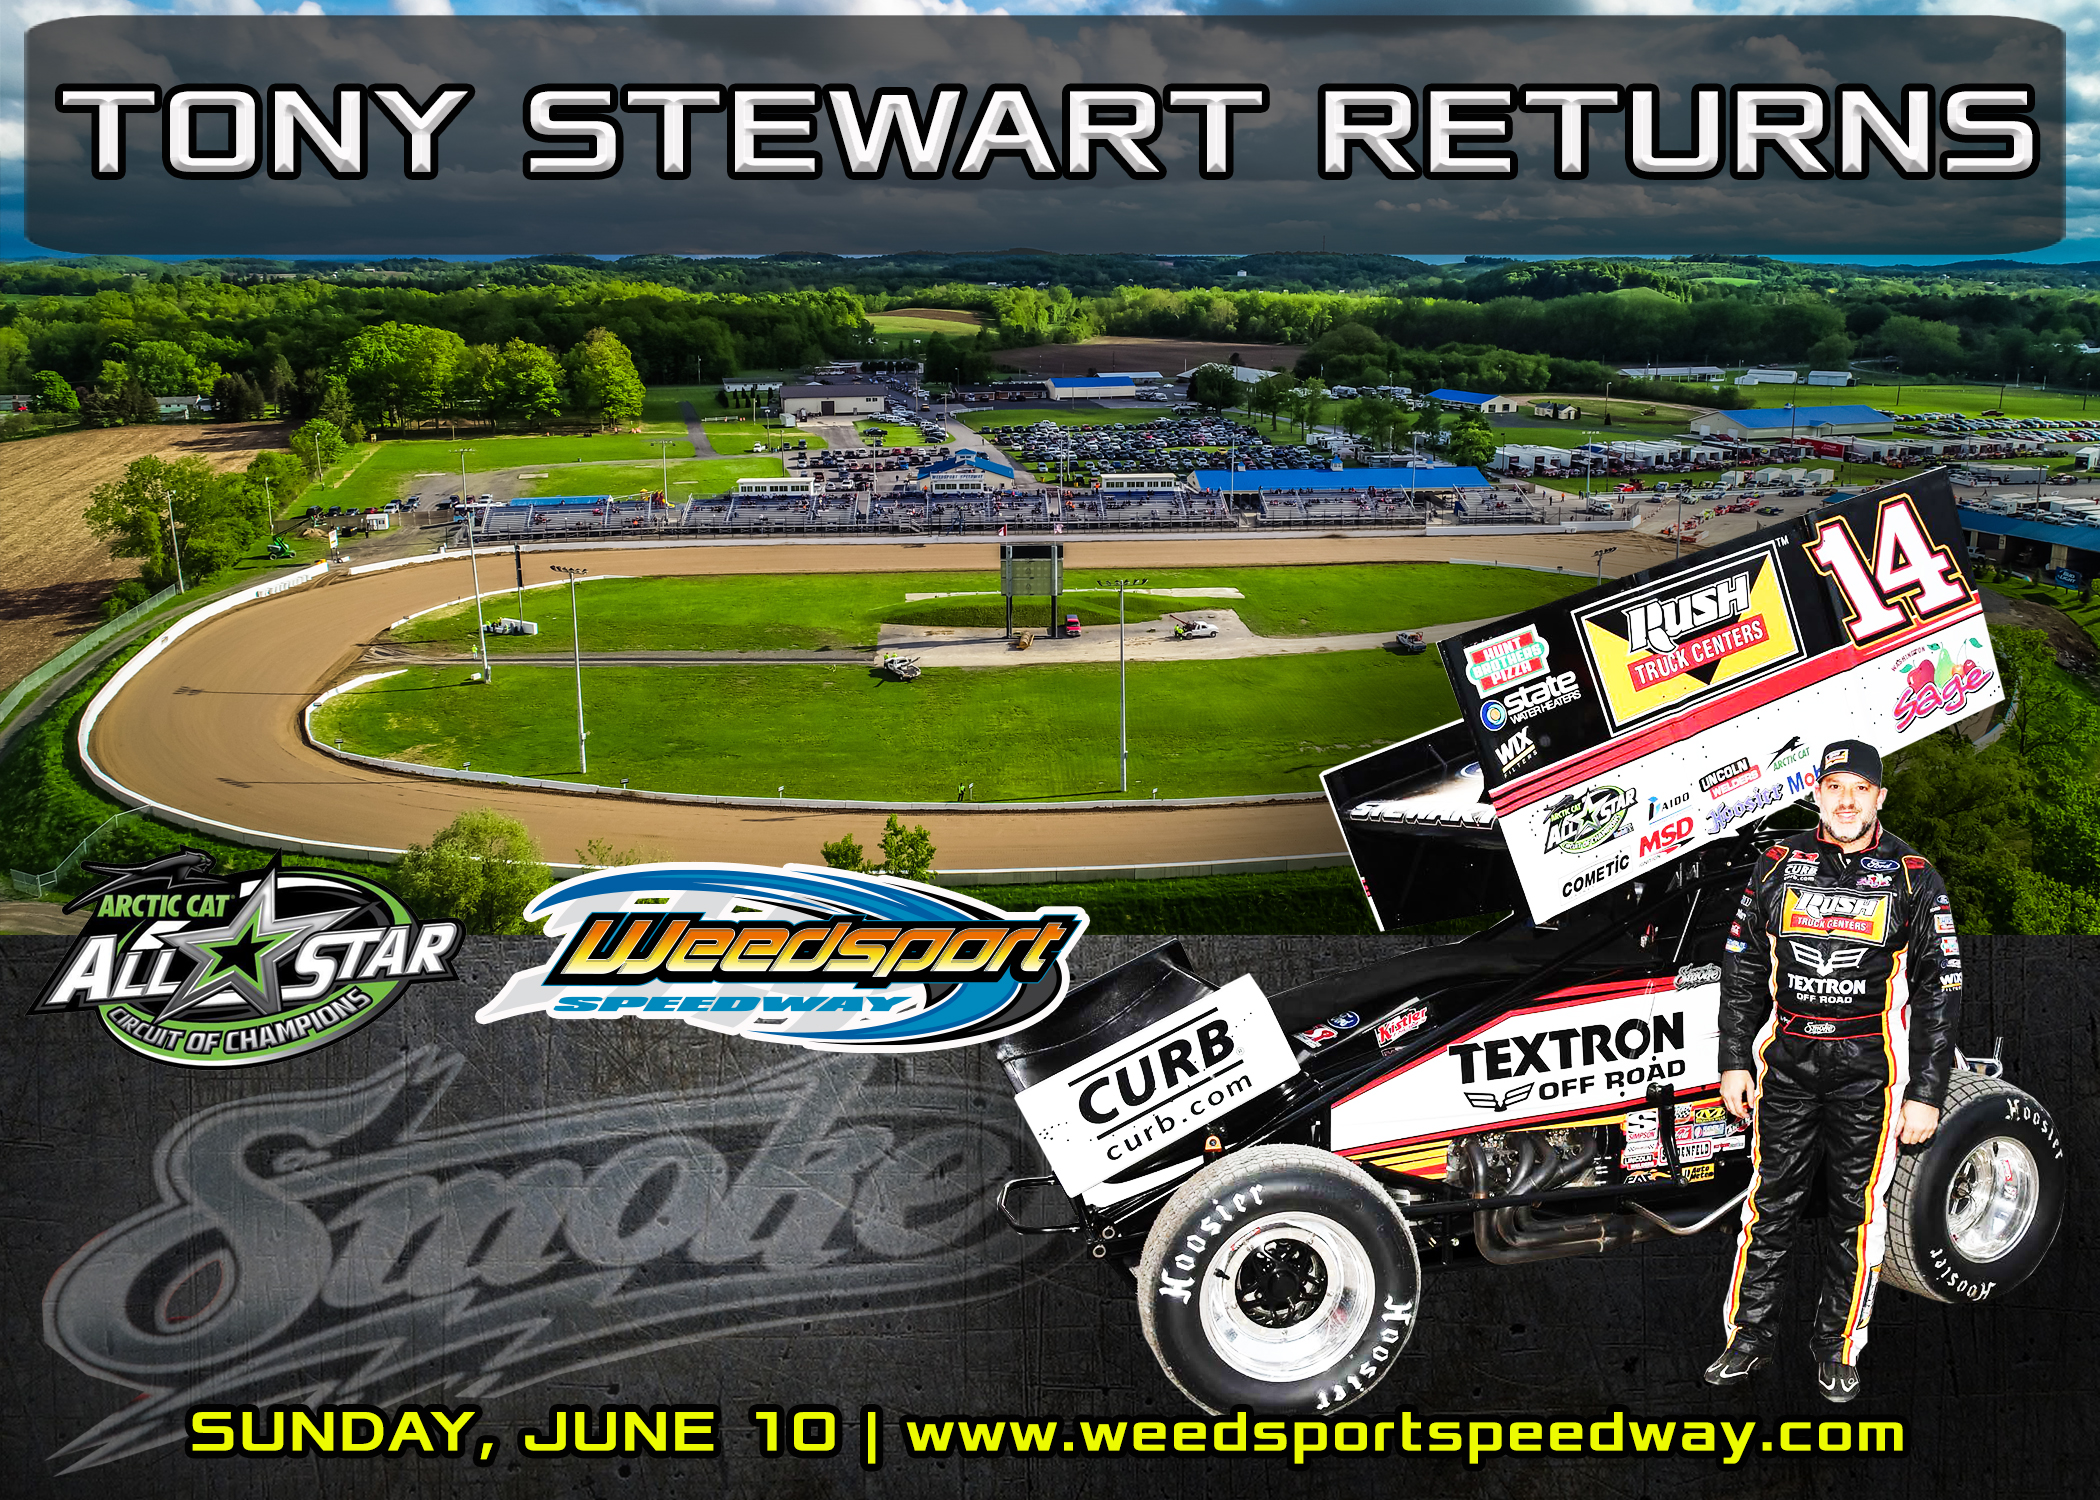 Tony Stewart to Race with All-Star Sprints at Weedsport on June 10 – Weedsport Speedway